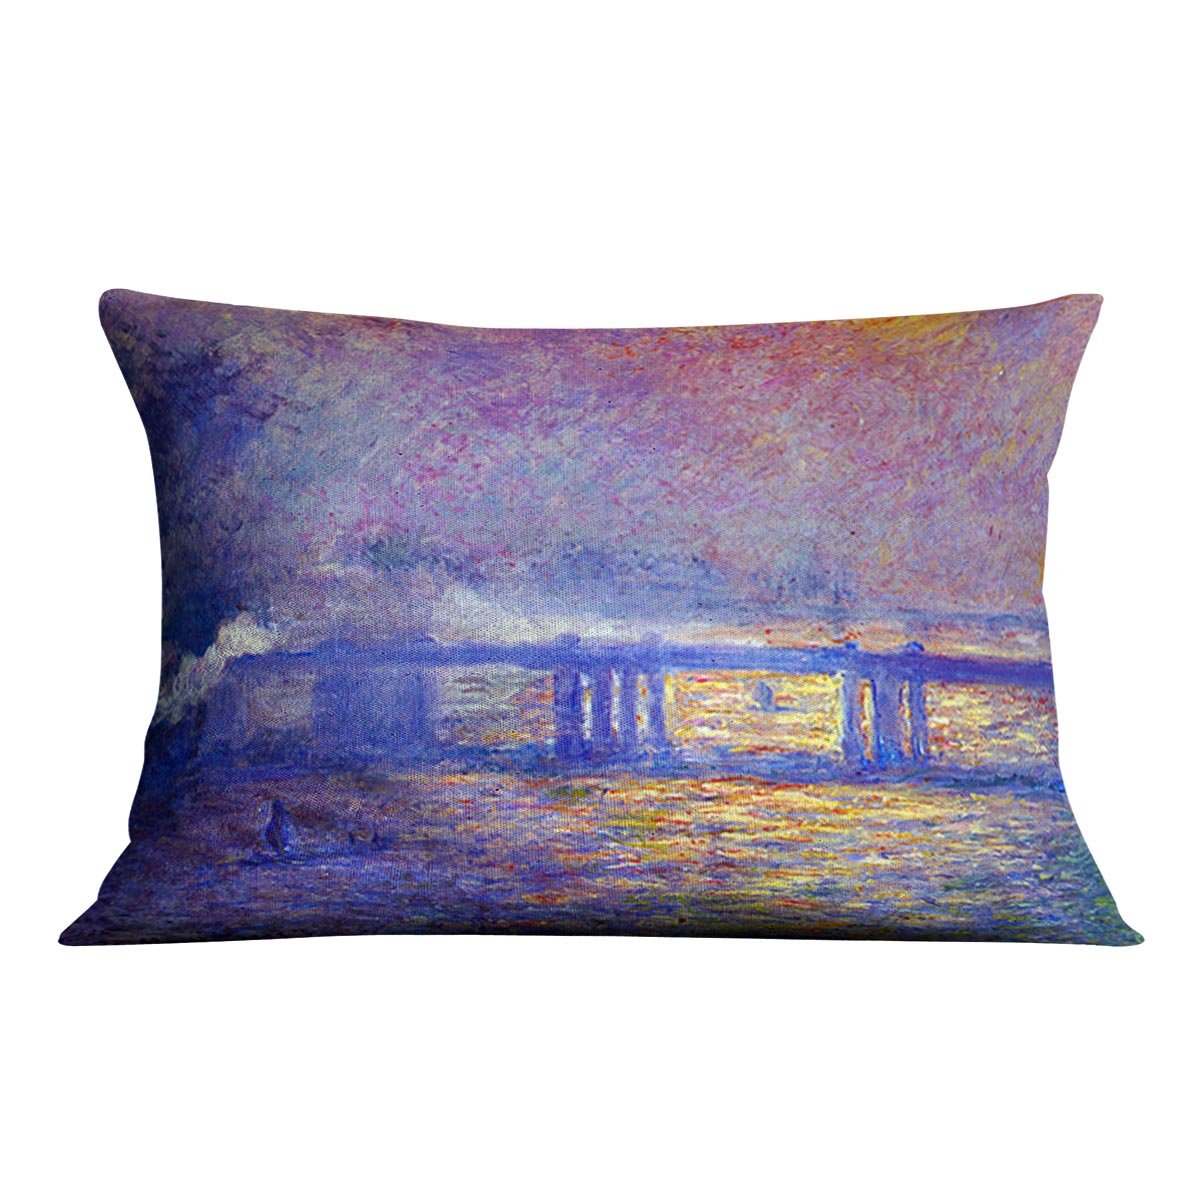 Charing cross bridge by Monet Throw Pillow